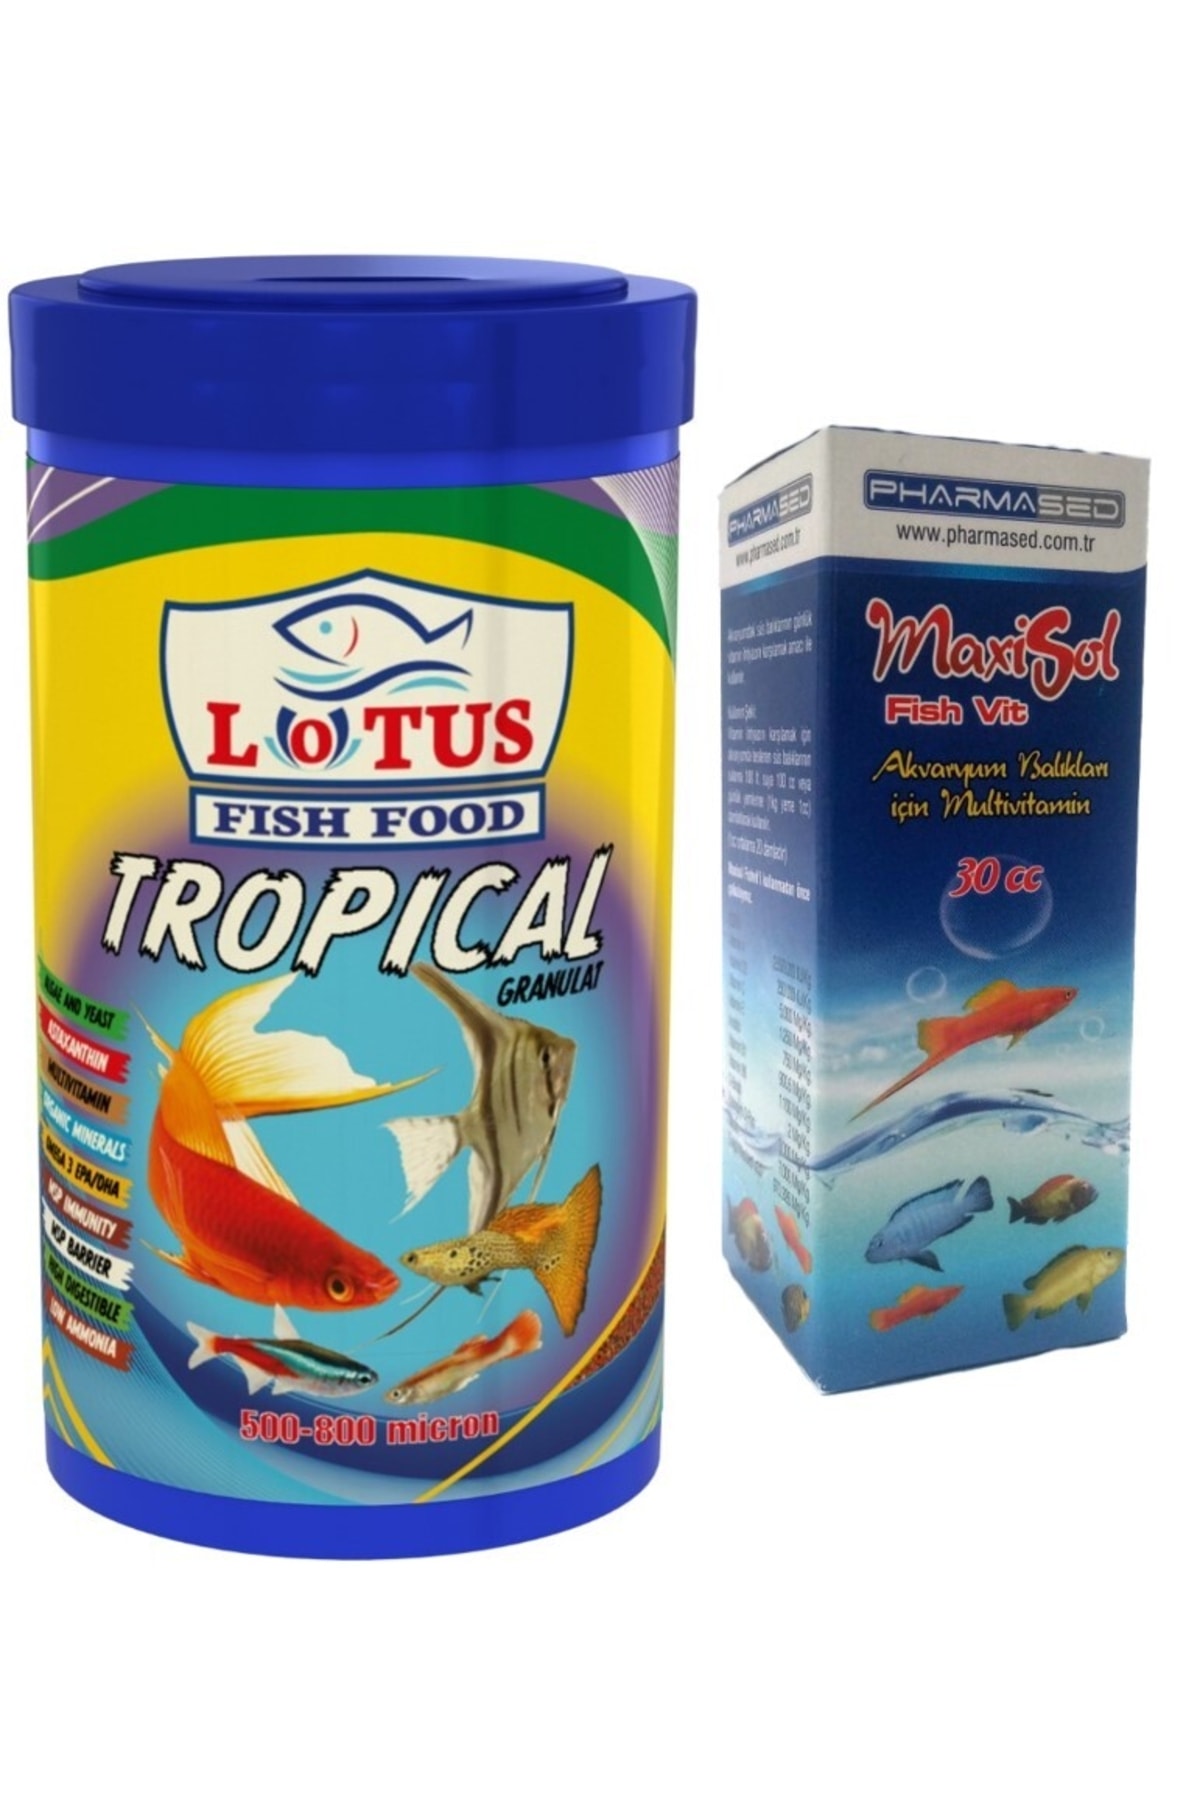 Lotus Tropical Granulat 100ml Tropikal Akvaryum Balik Yemi Ve Vitamini